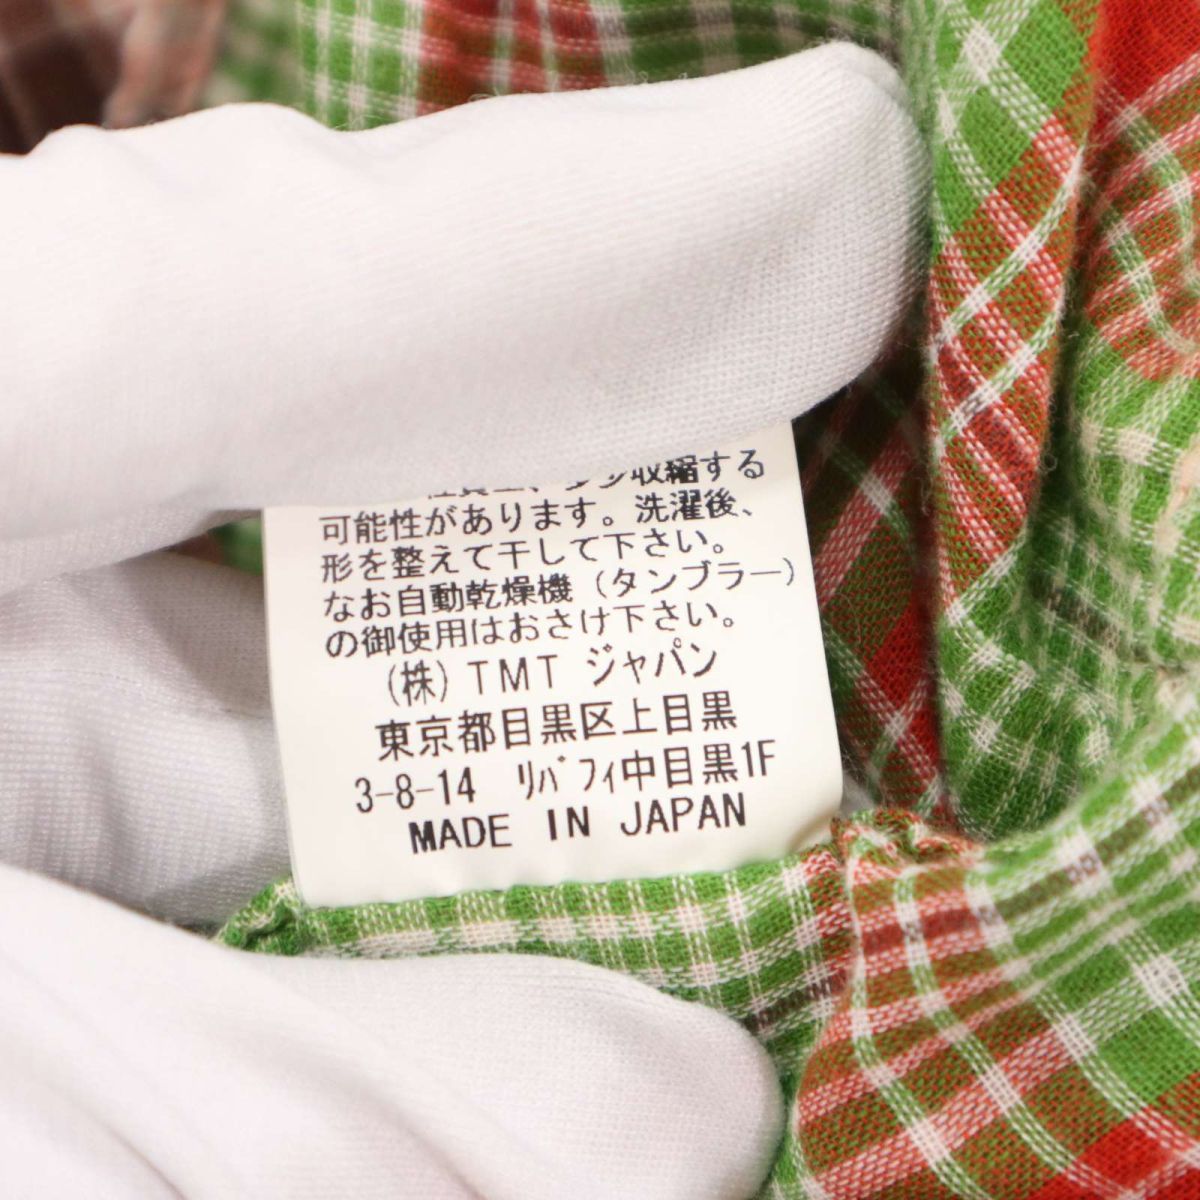 TMT tea Emuti big Hori te- through year Logo embroidery * double gauze long sleeve Western check shirt Sz.M men's made in Japan I3T00612_7#A